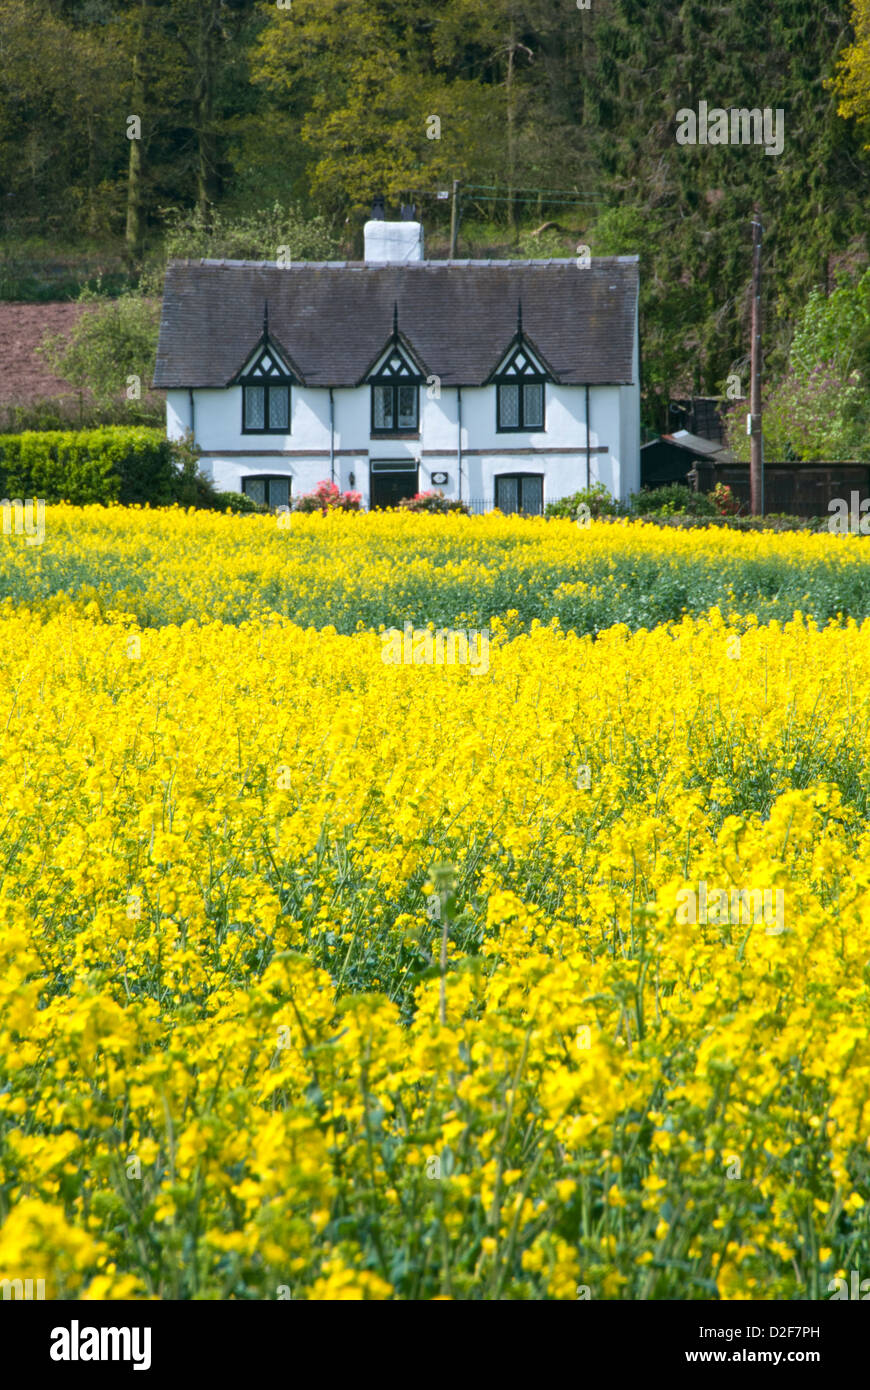 Hübsche weiße Hütte & gelben Raps Feld, nahe Peckforton, Cheshire, England, UK Stockfoto